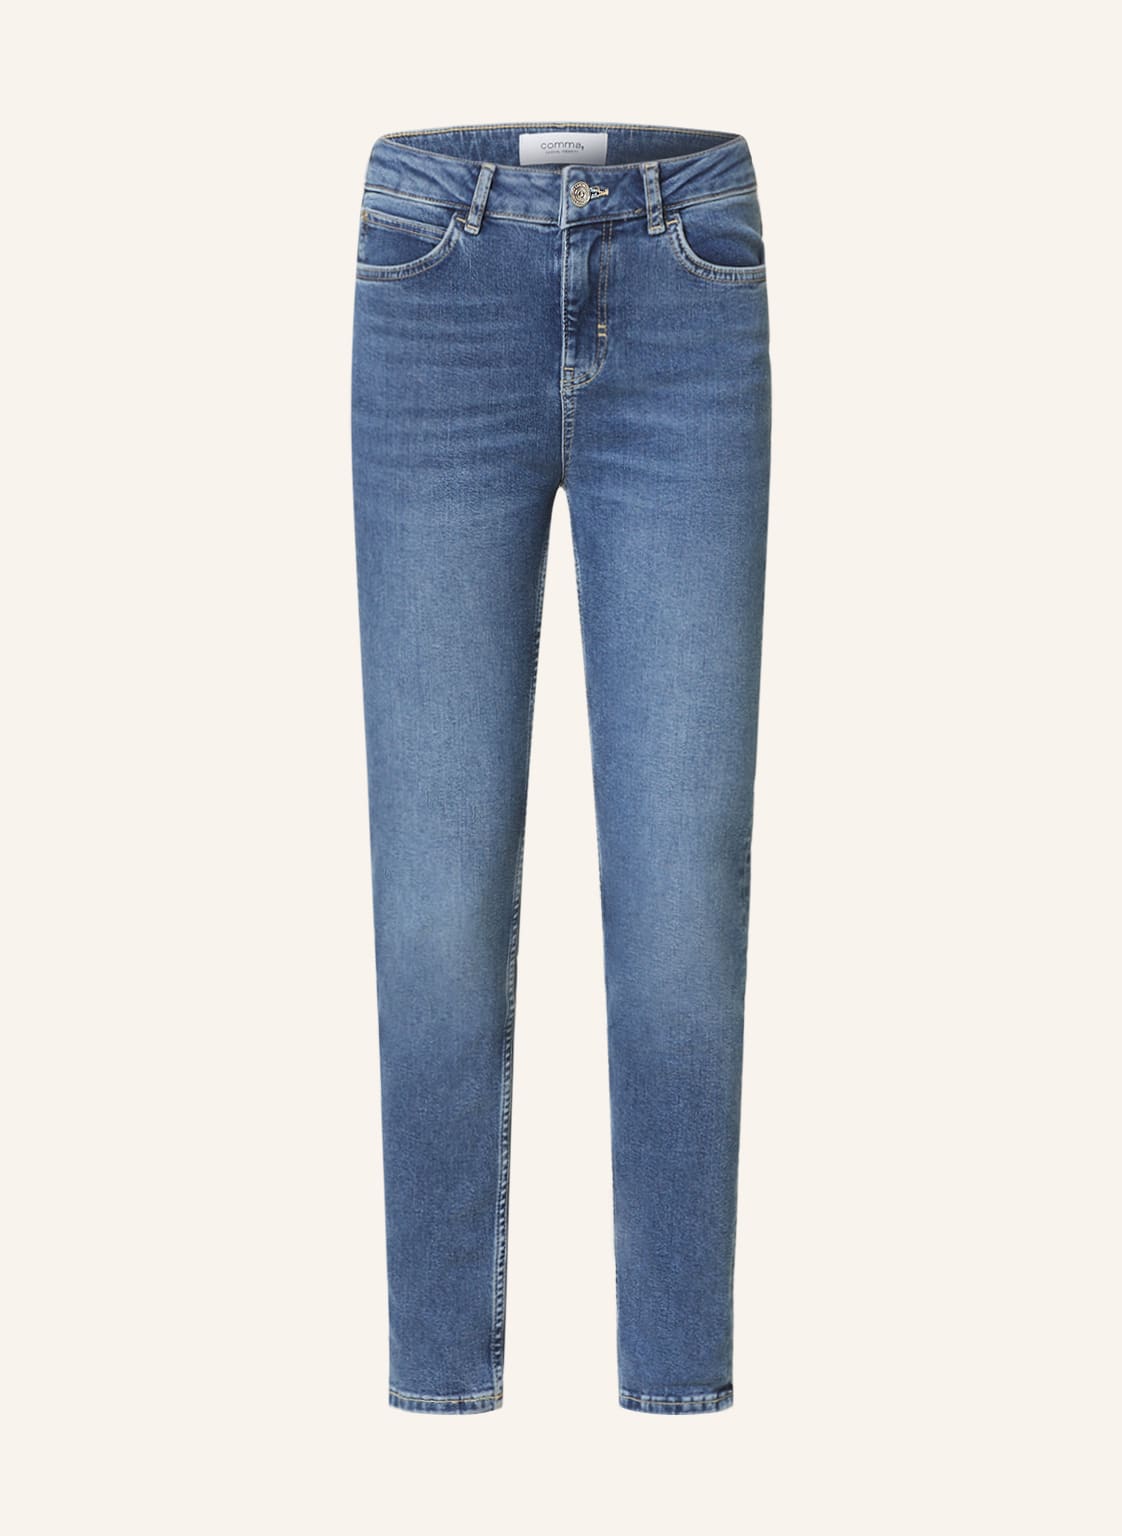 Comma Casual Identity Skinny Jeans blau von comma casual identity